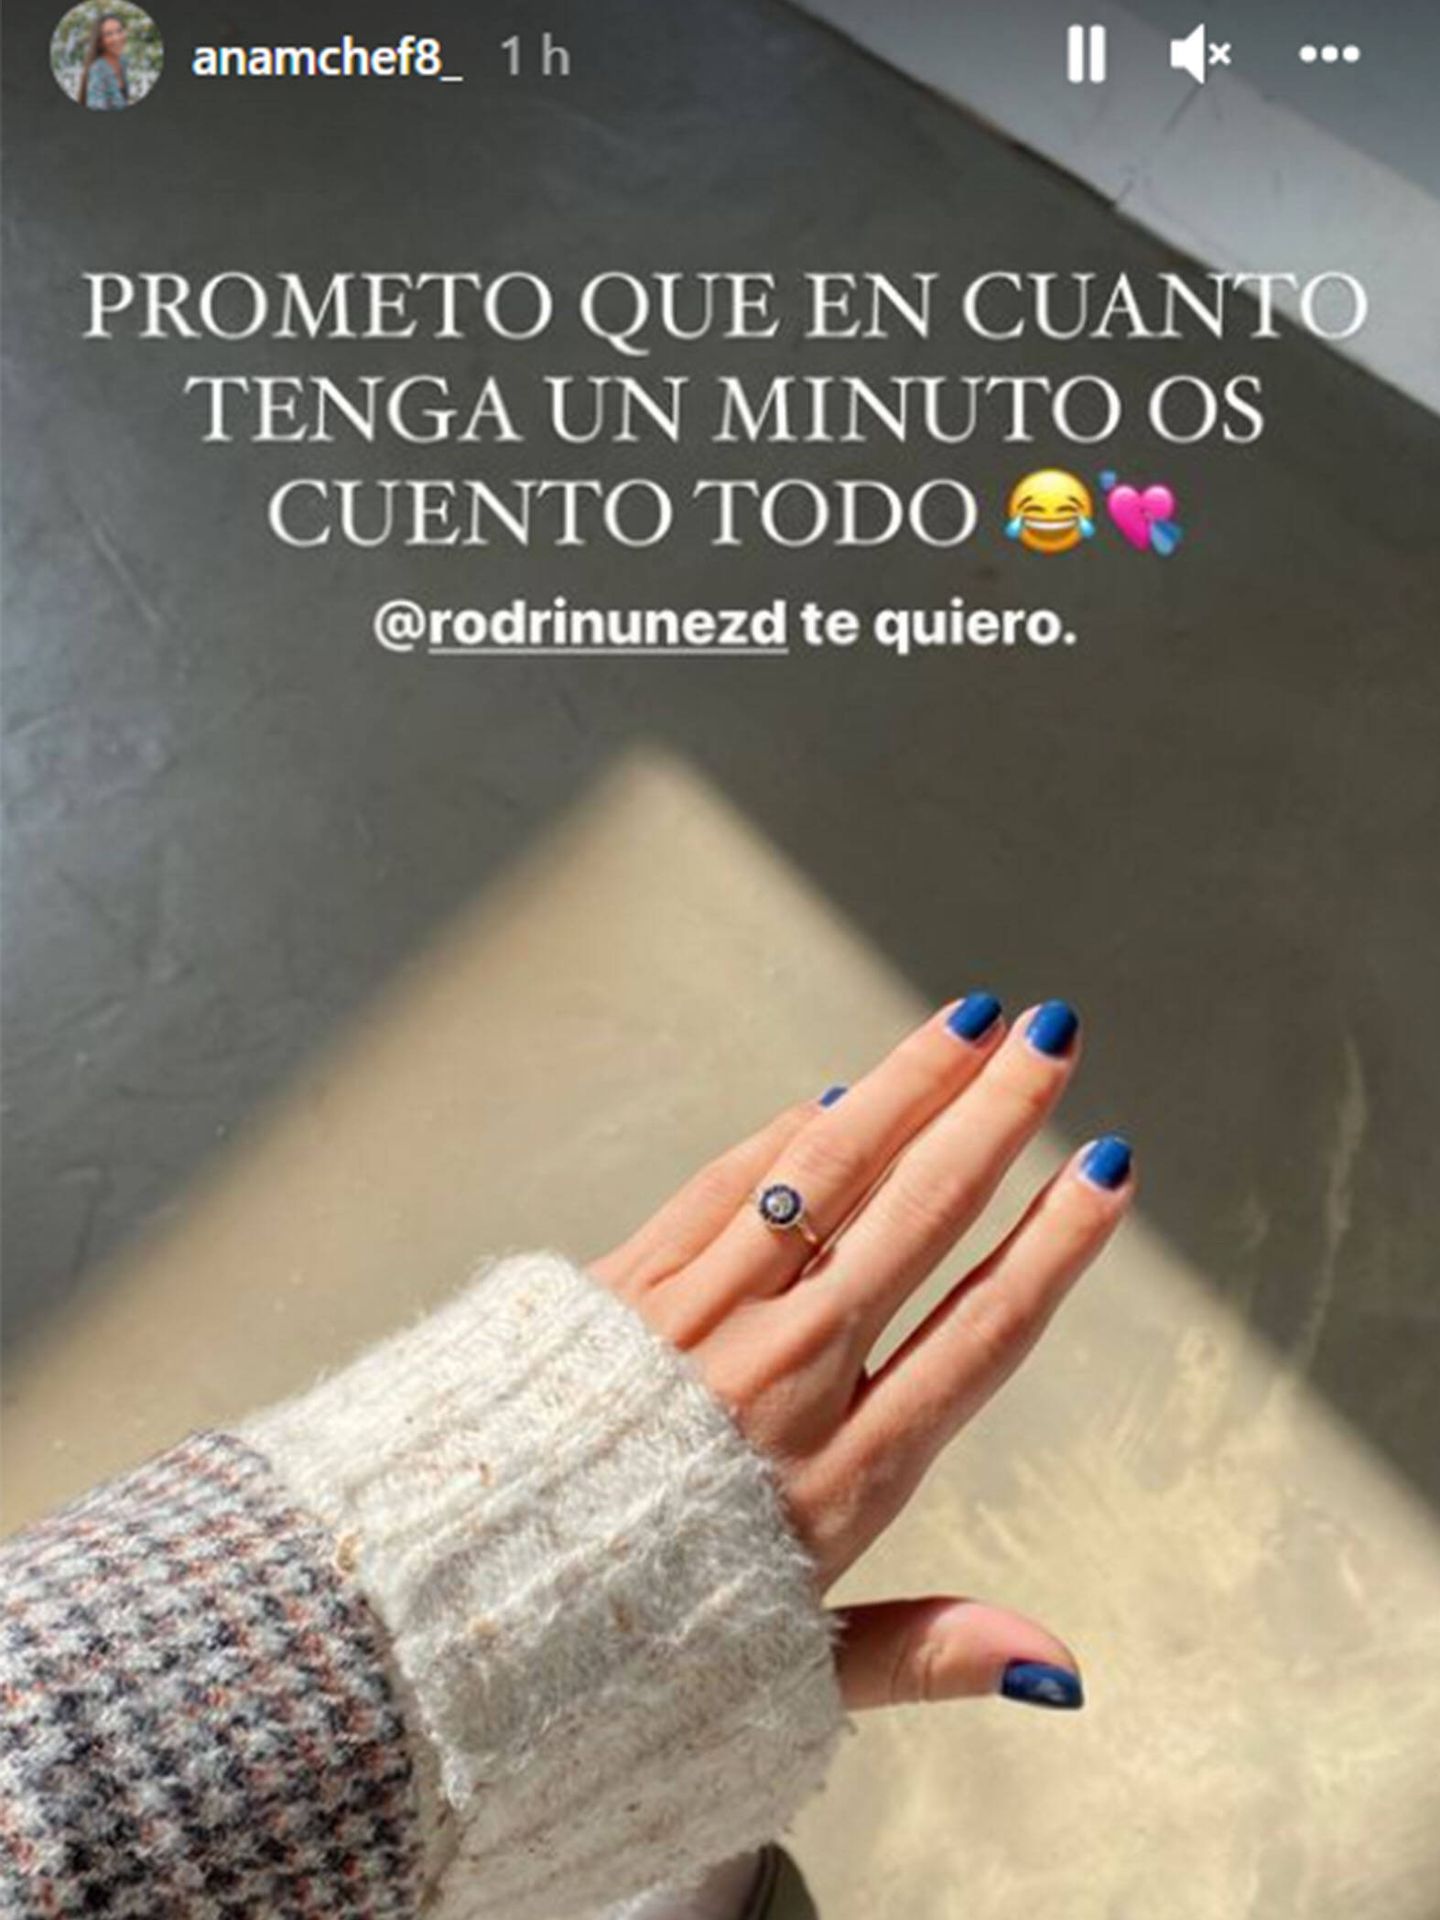 Ana Iglesias enseña su anillo de compromiso en redes sociales. (Instagram @anamchef8_)